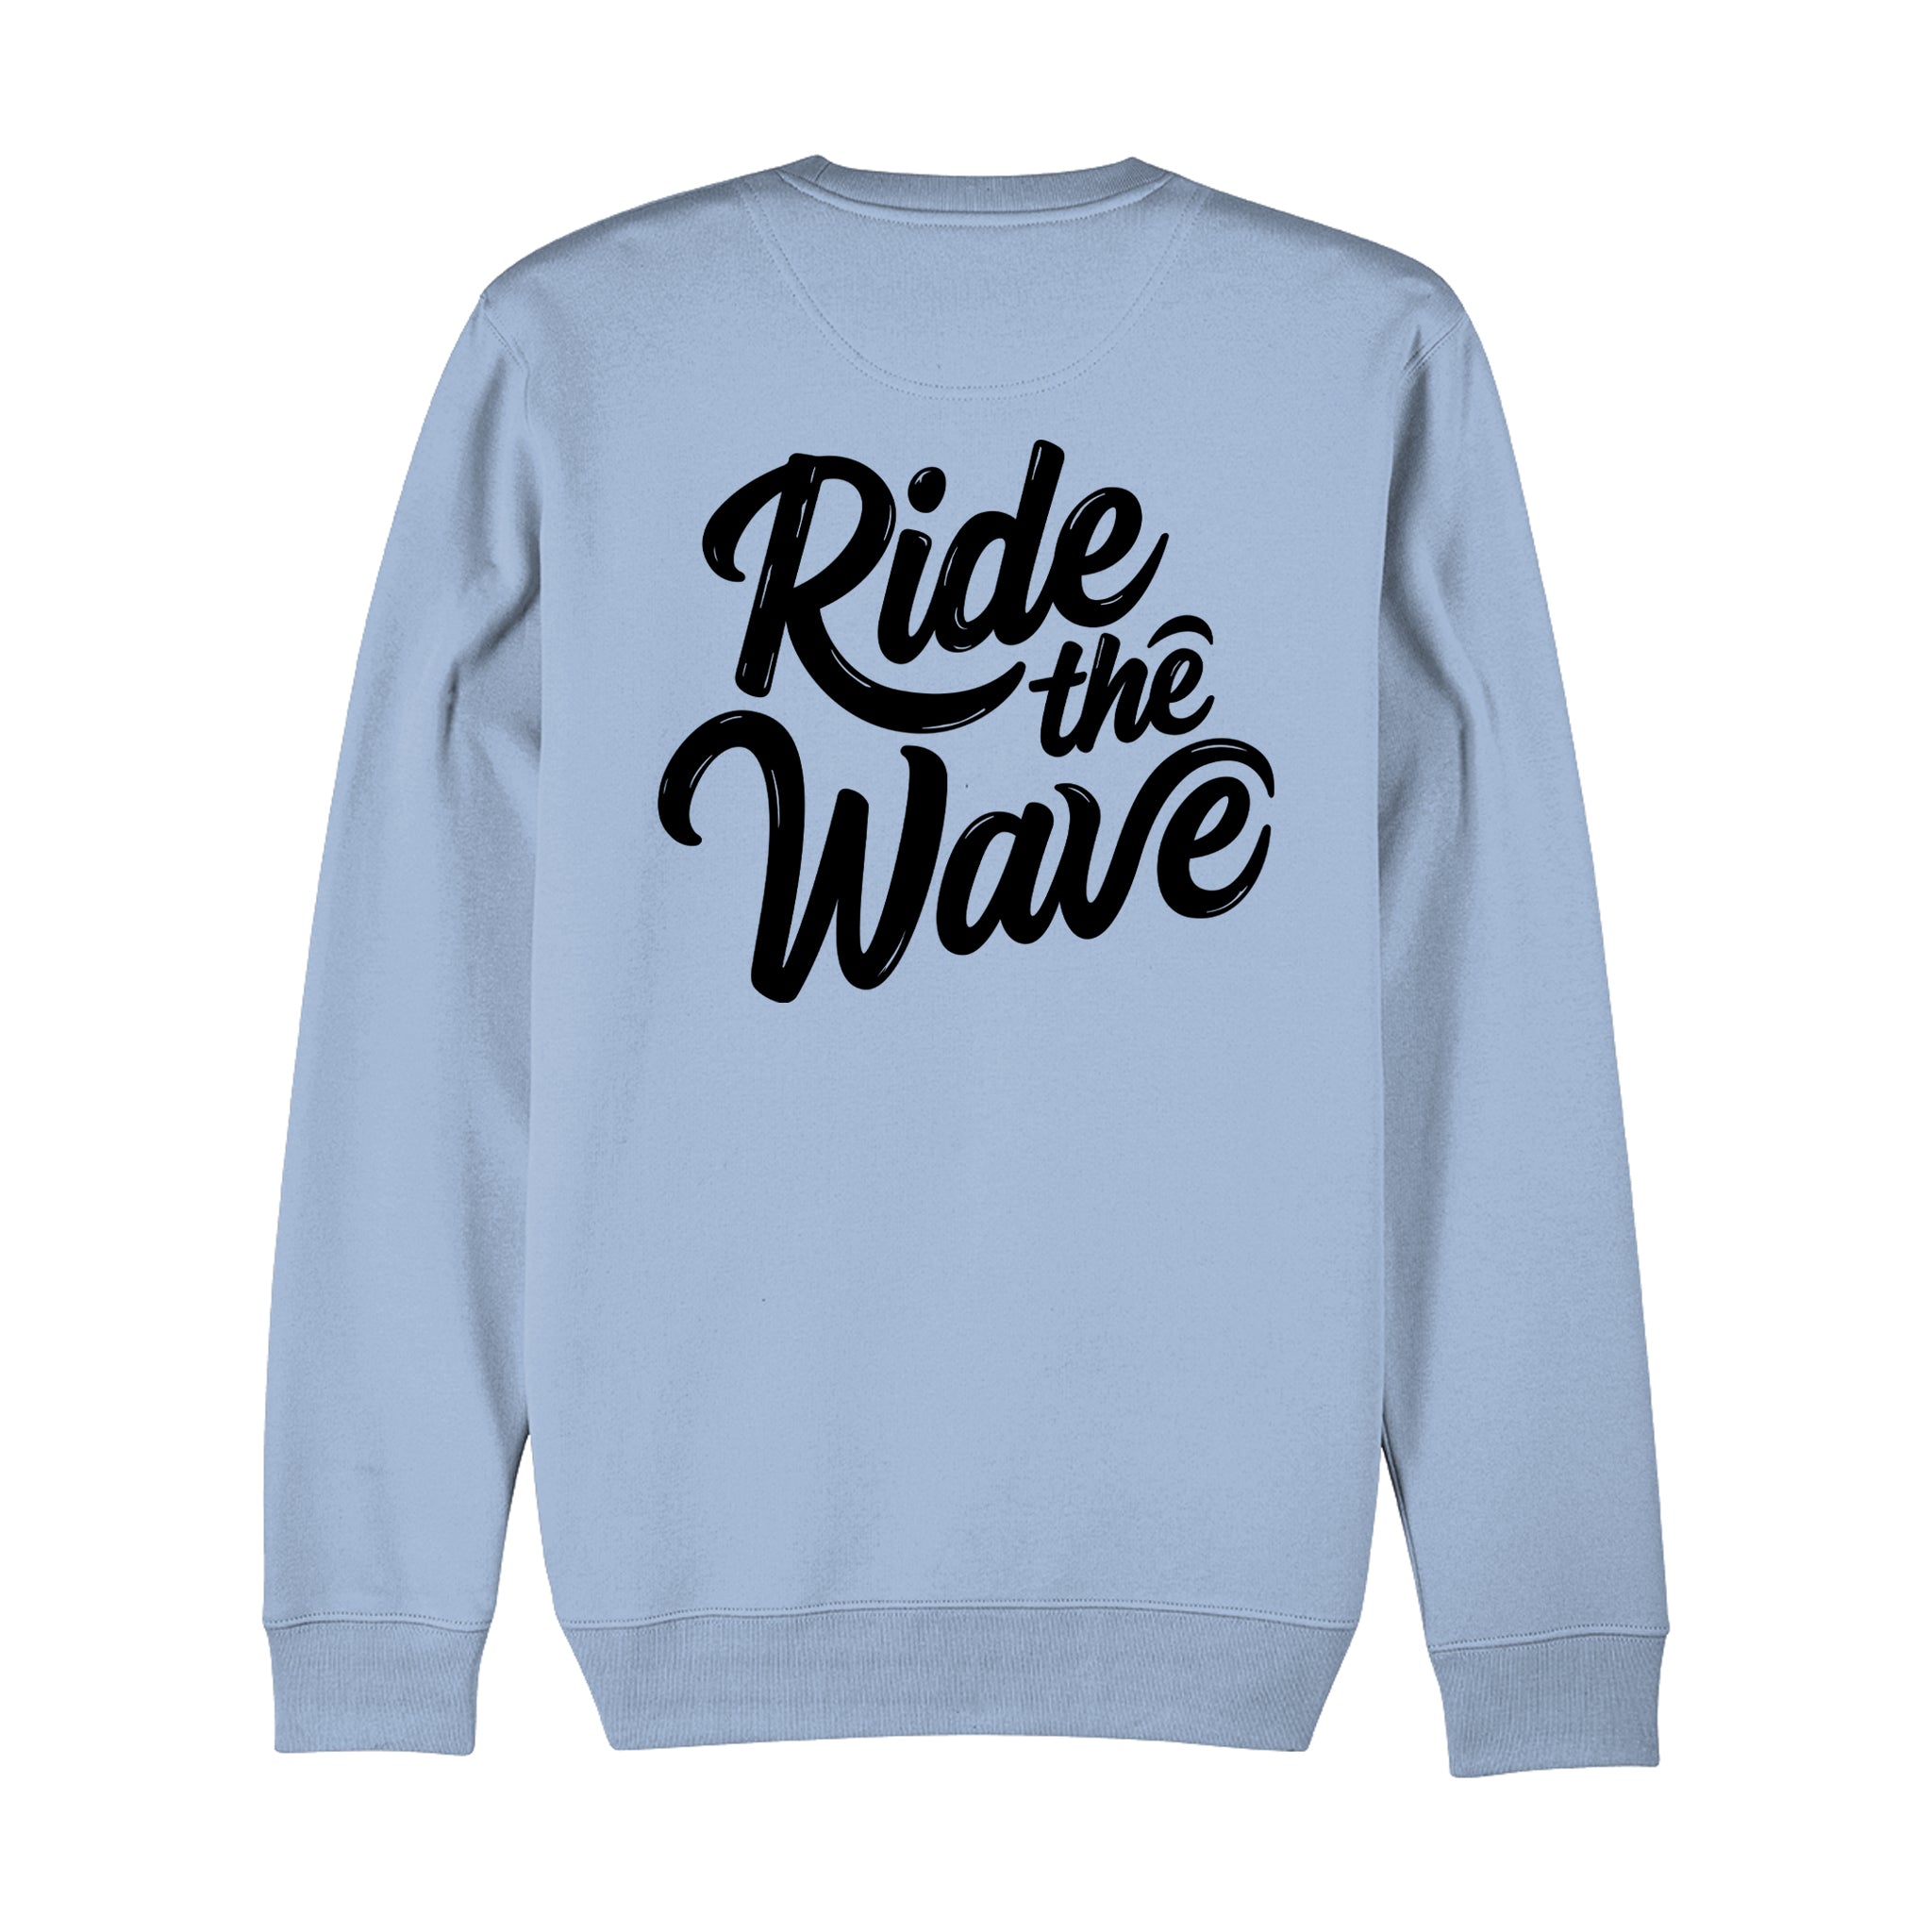 'Ride The Wave' Women's Sweatshirts